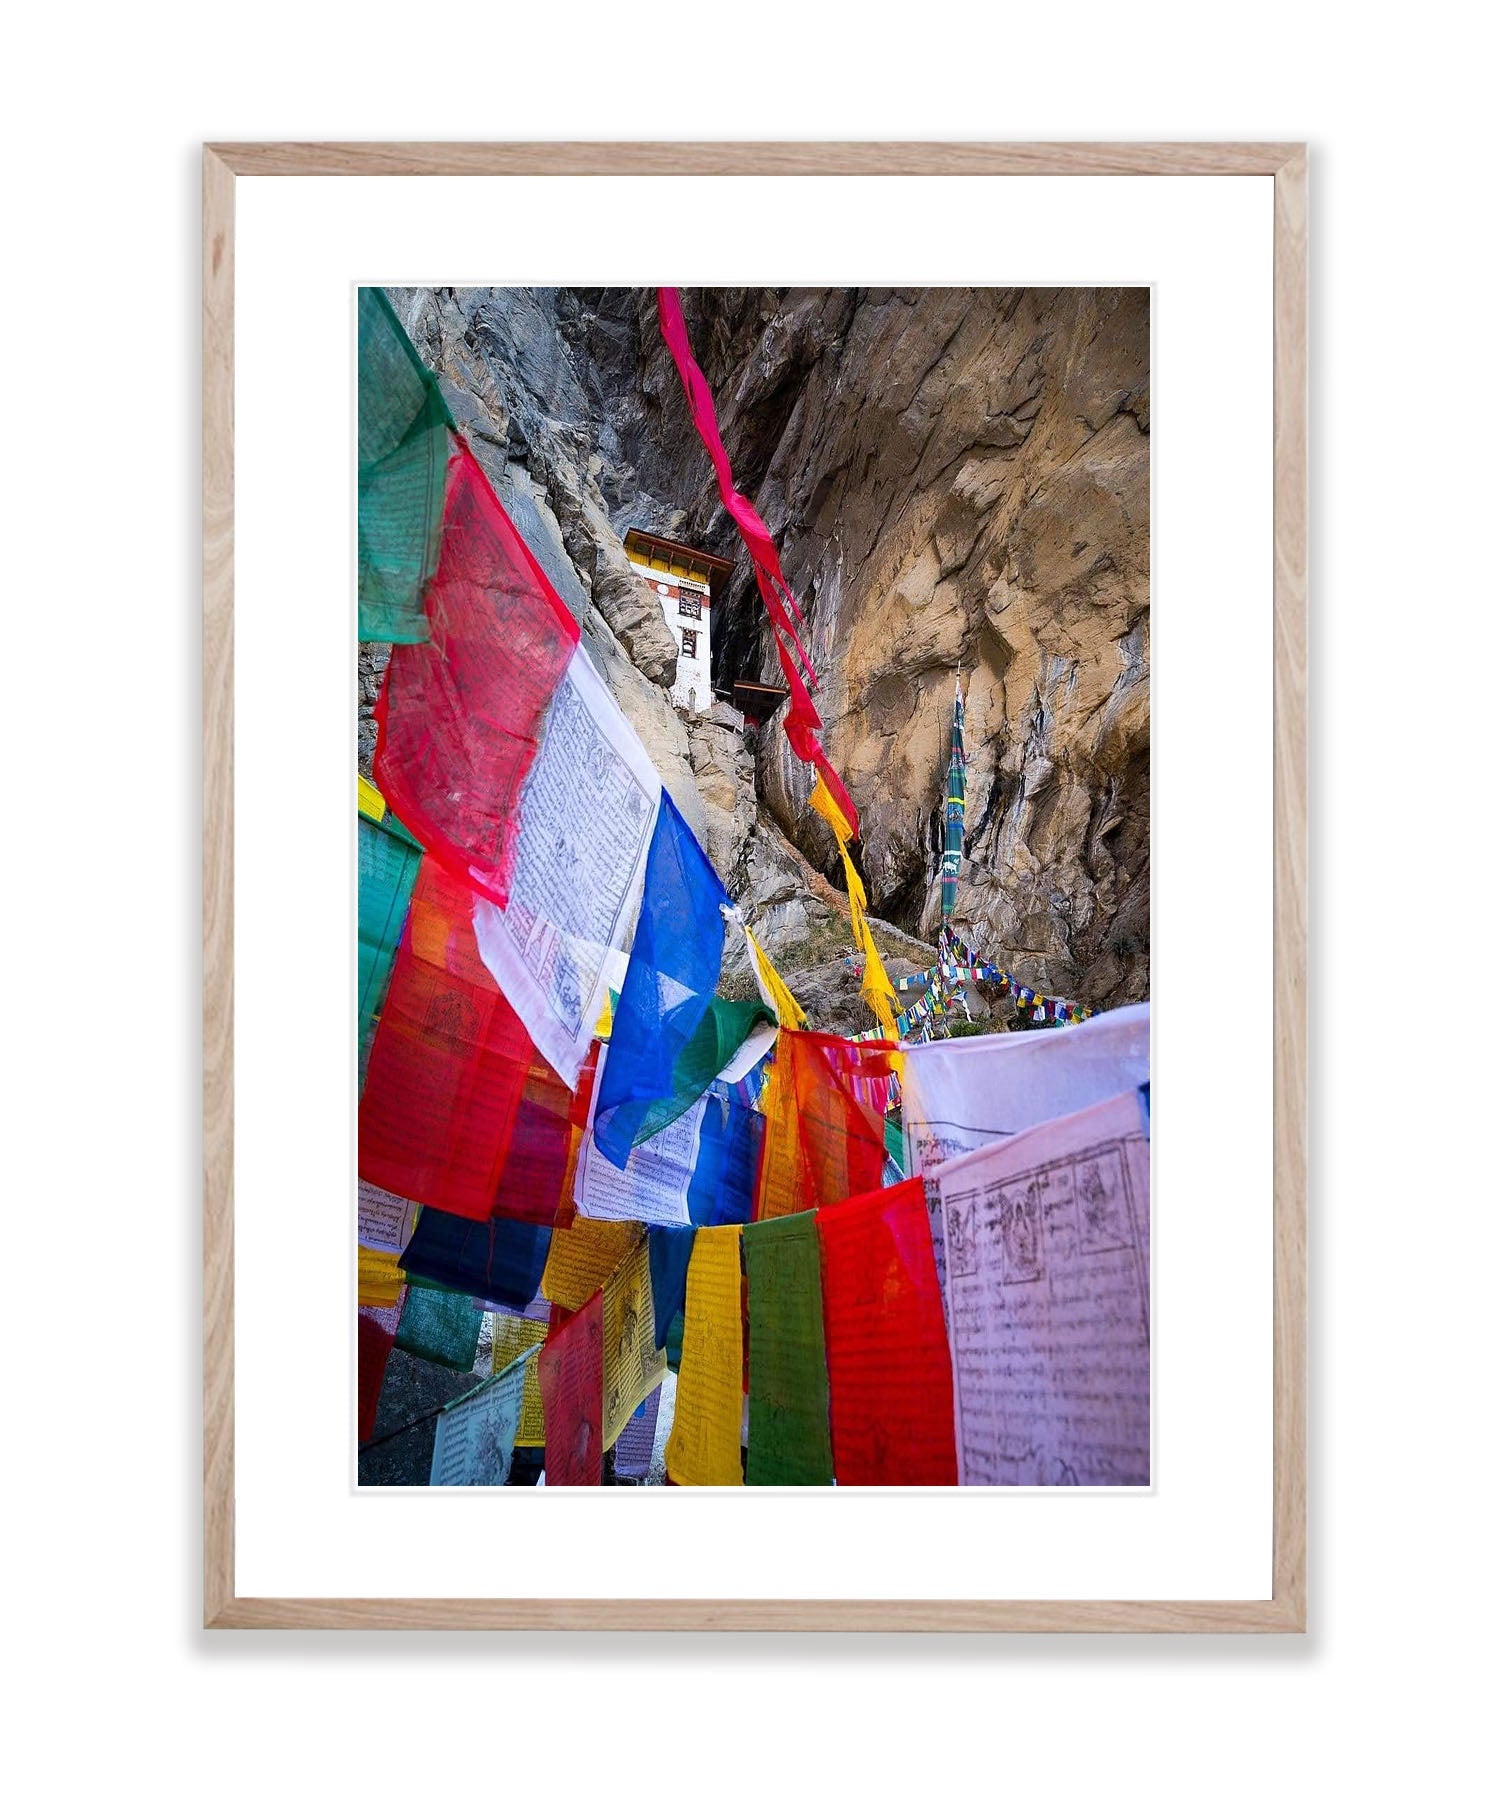 Bhutan Temple and Prayer Flags